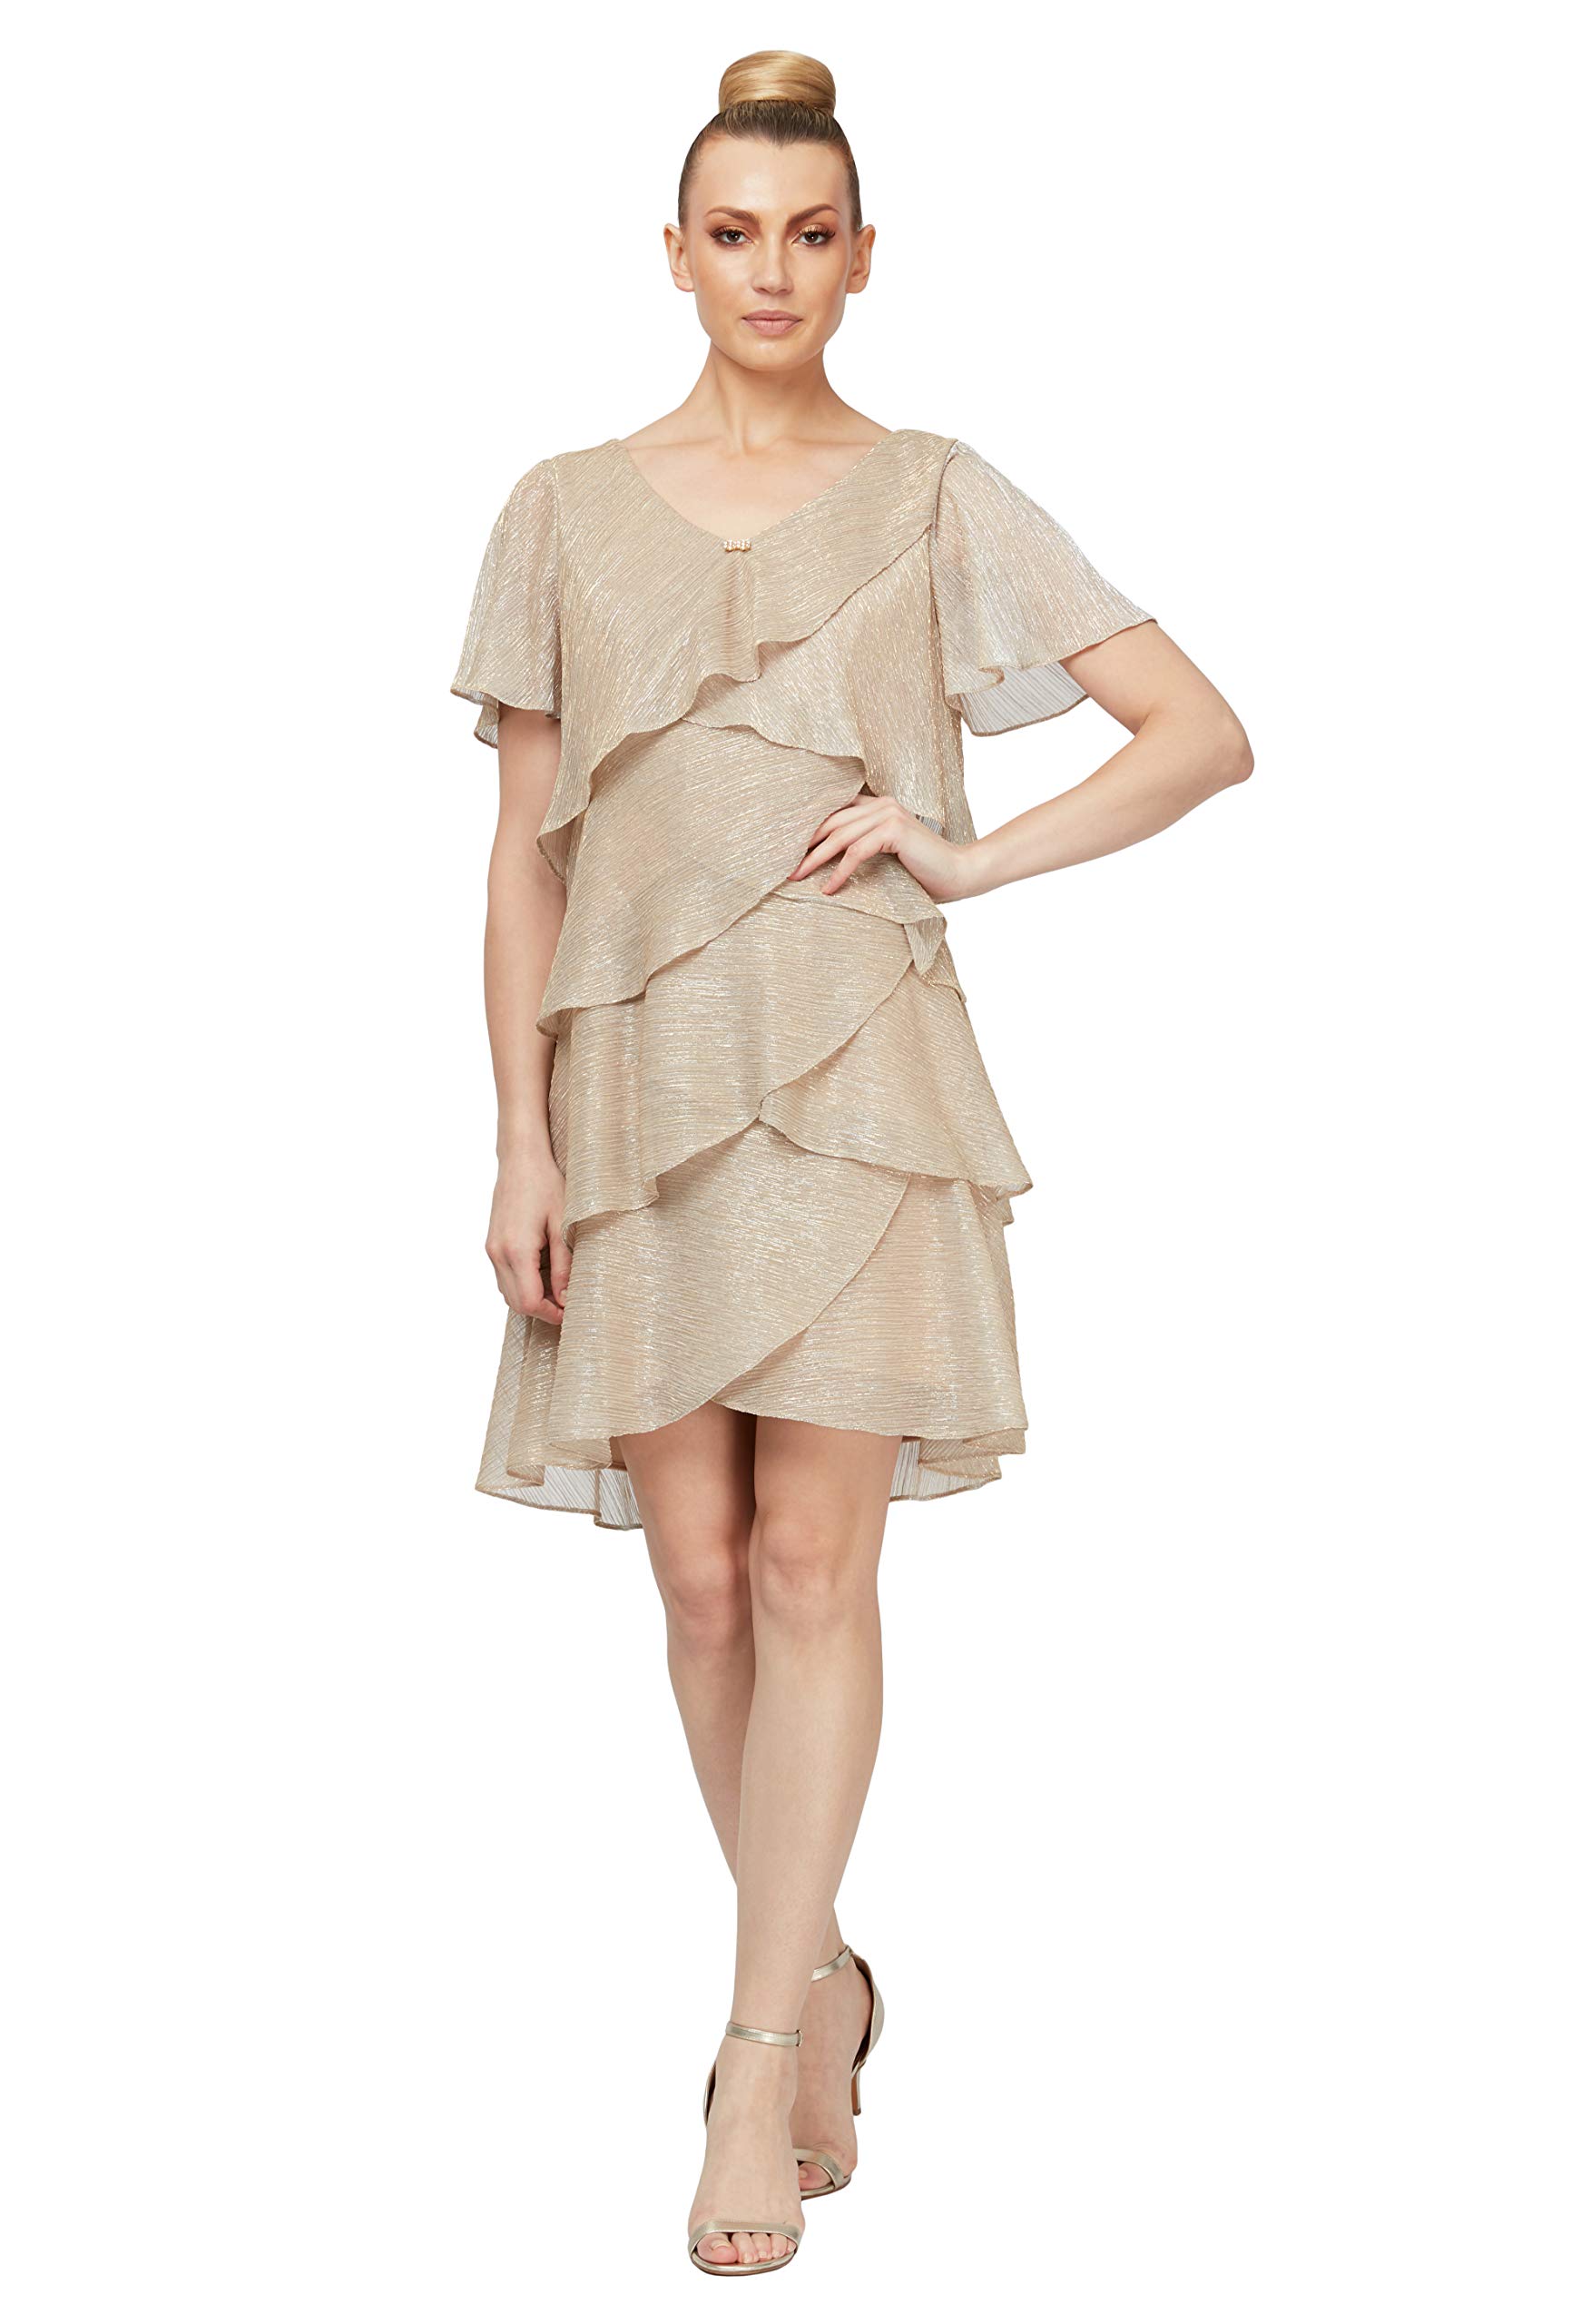 S.L. Fashions Women's Plus Size Short Sleeve Pebble Tier Dress